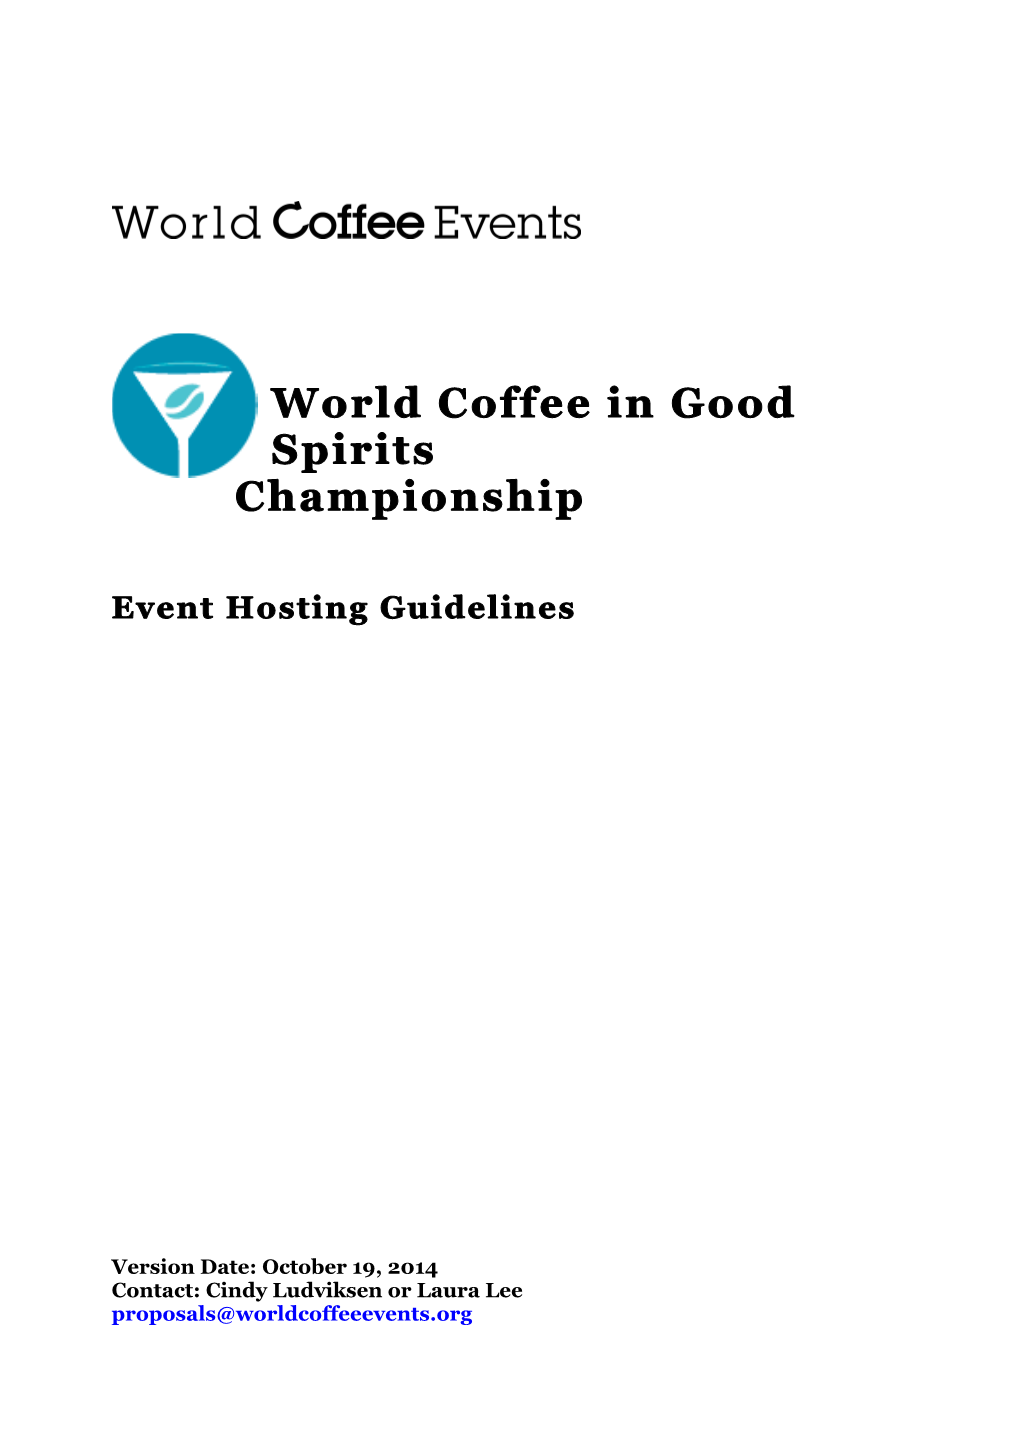 World Coffee in Good Spirits Championship